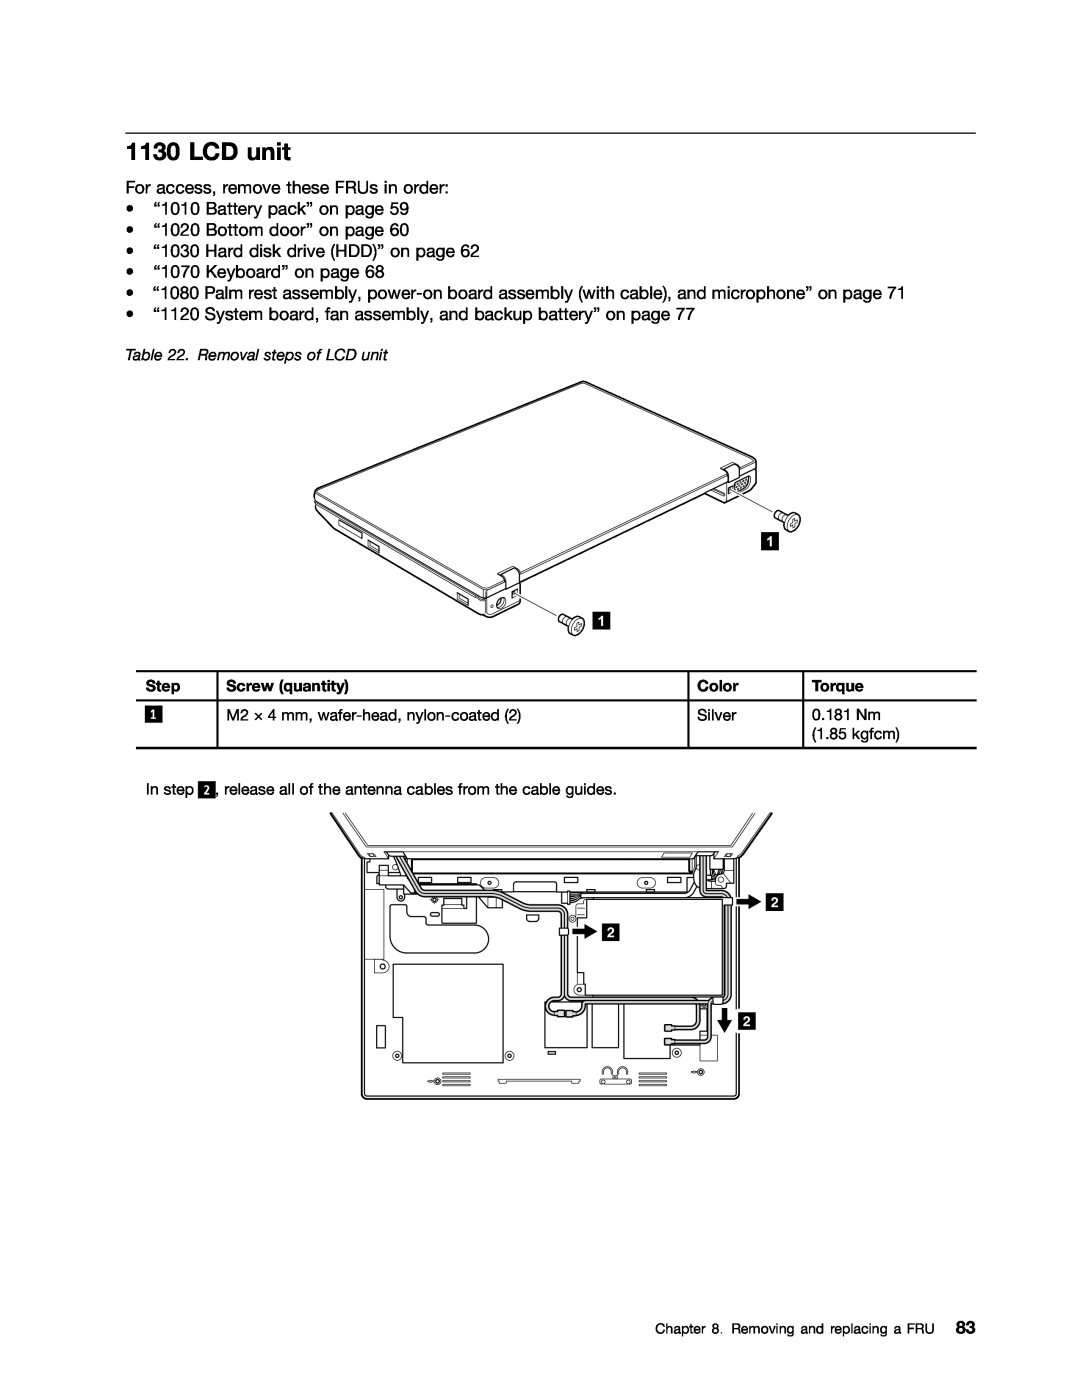 Lenovo E10 manual Removal steps of LCD unit 